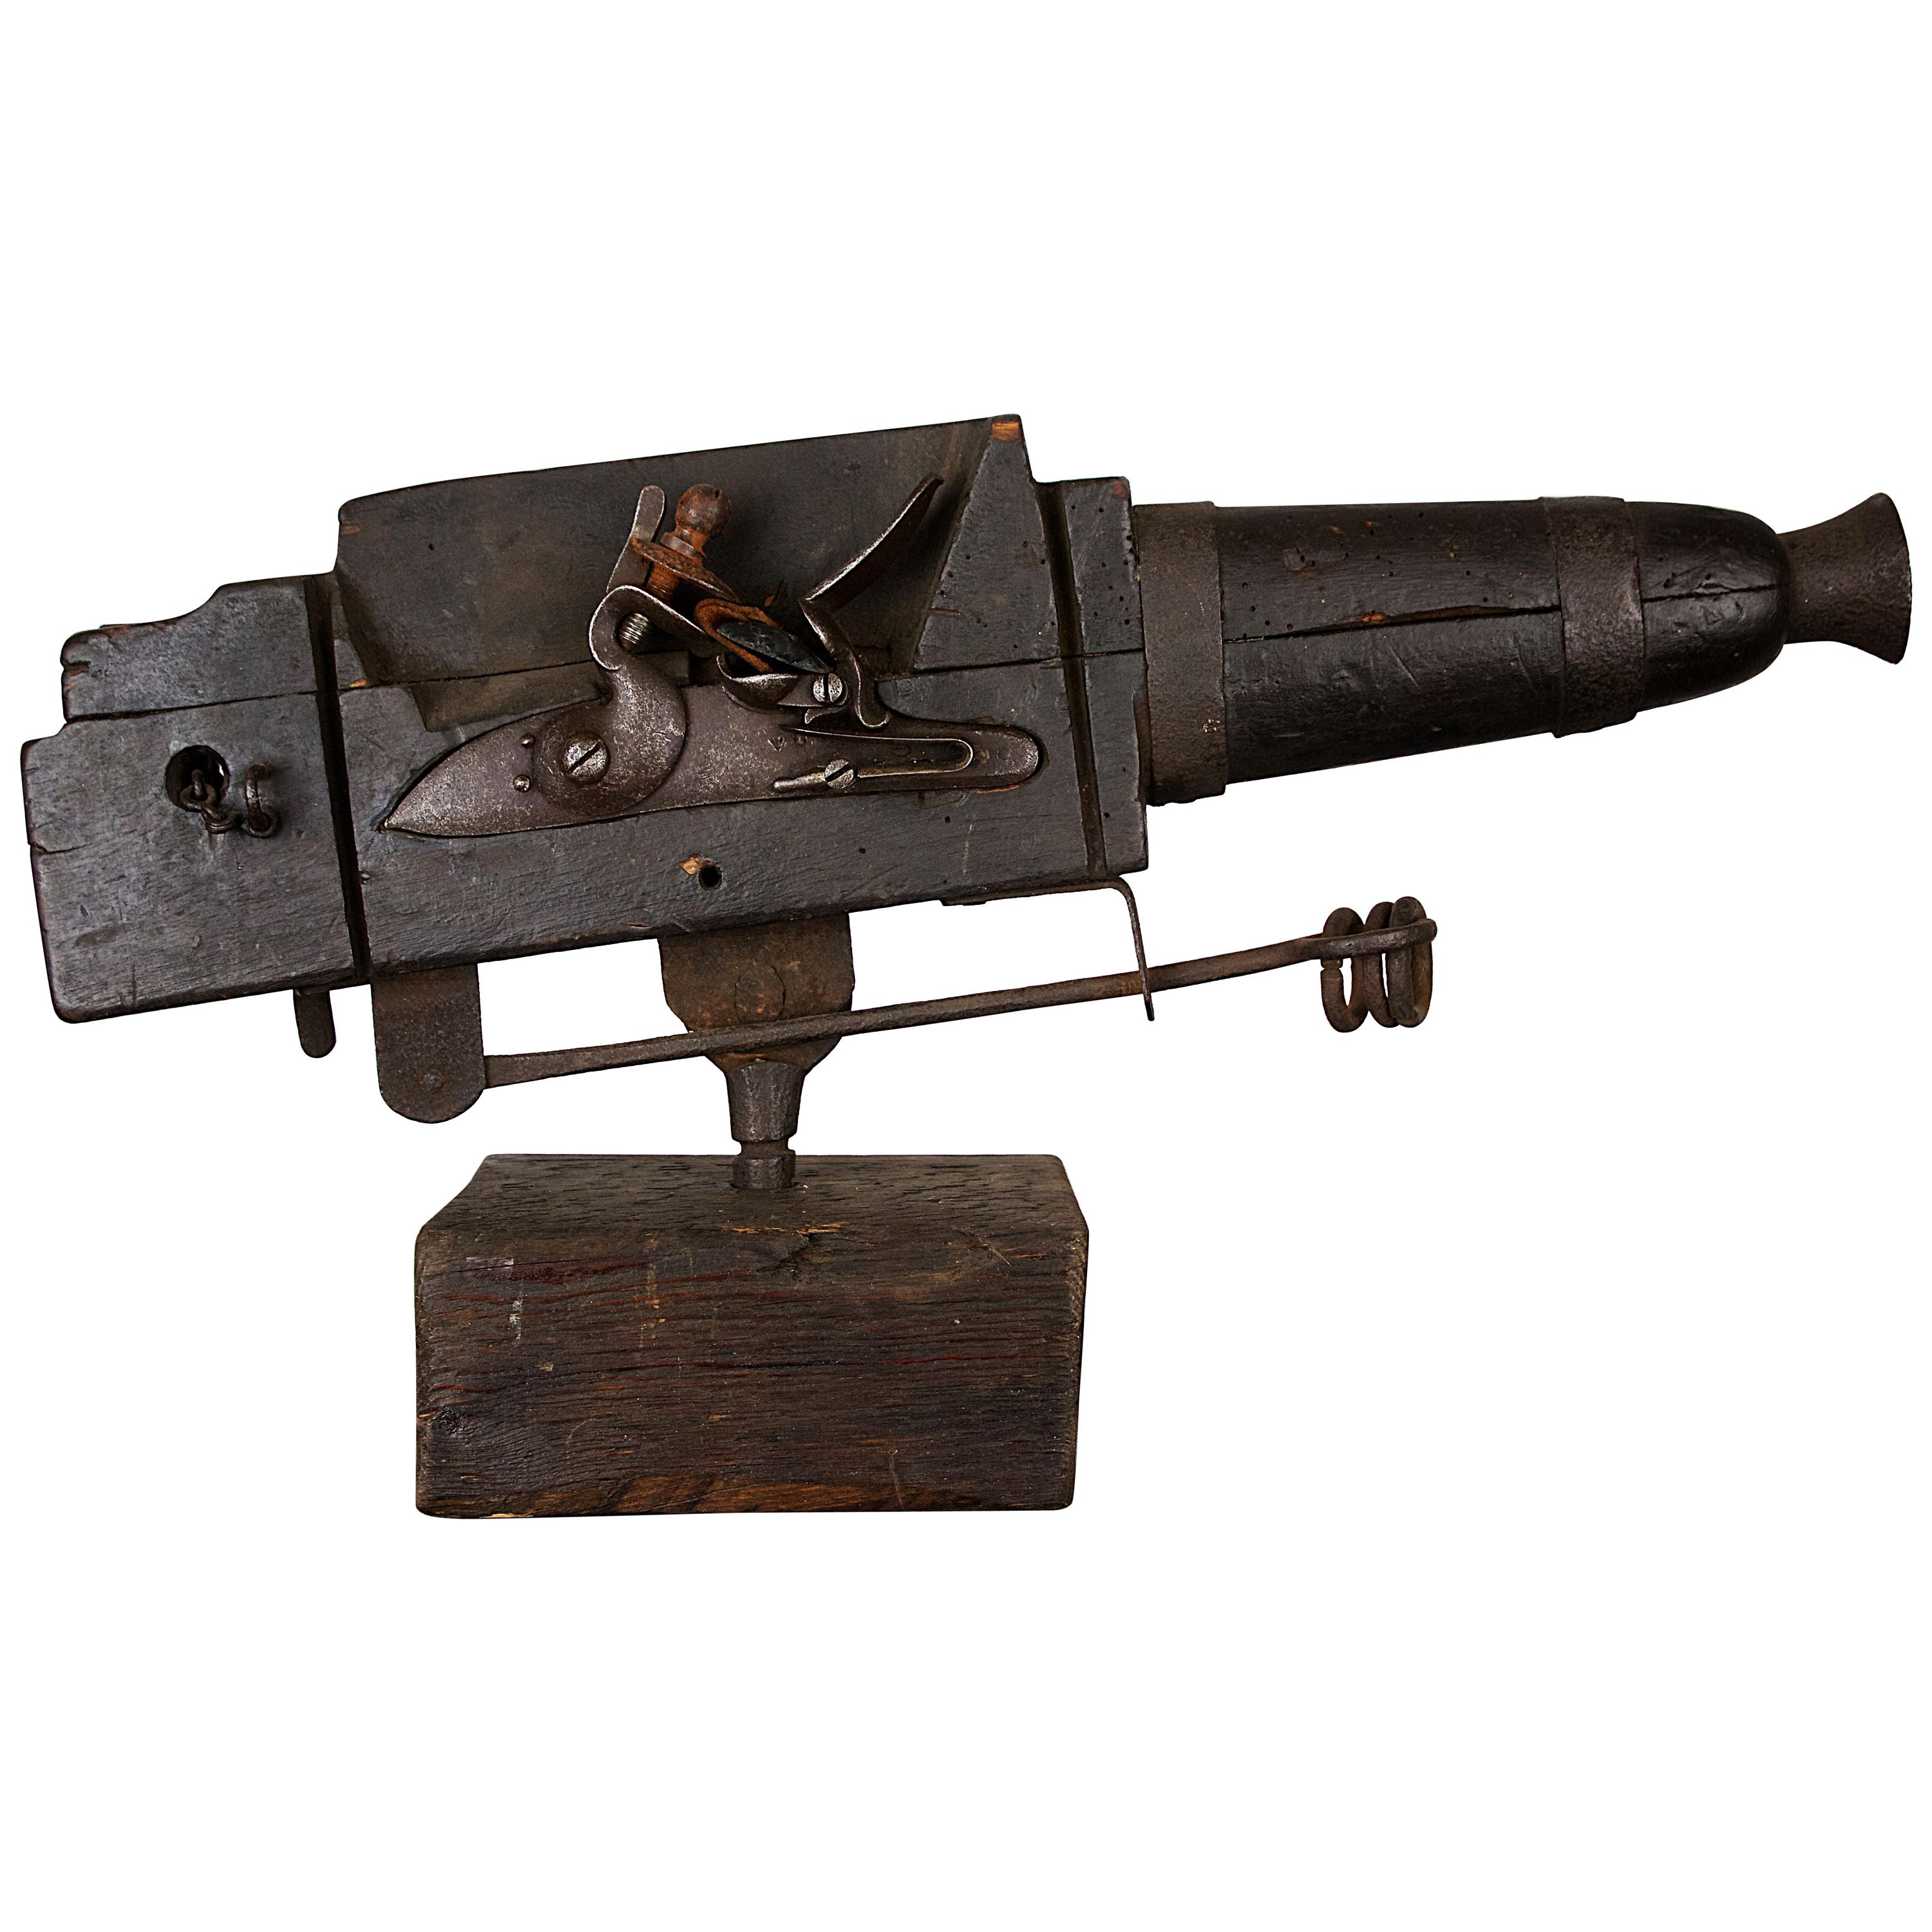 Flintlock Alarm Gun with Flared Barrel, circa 1800